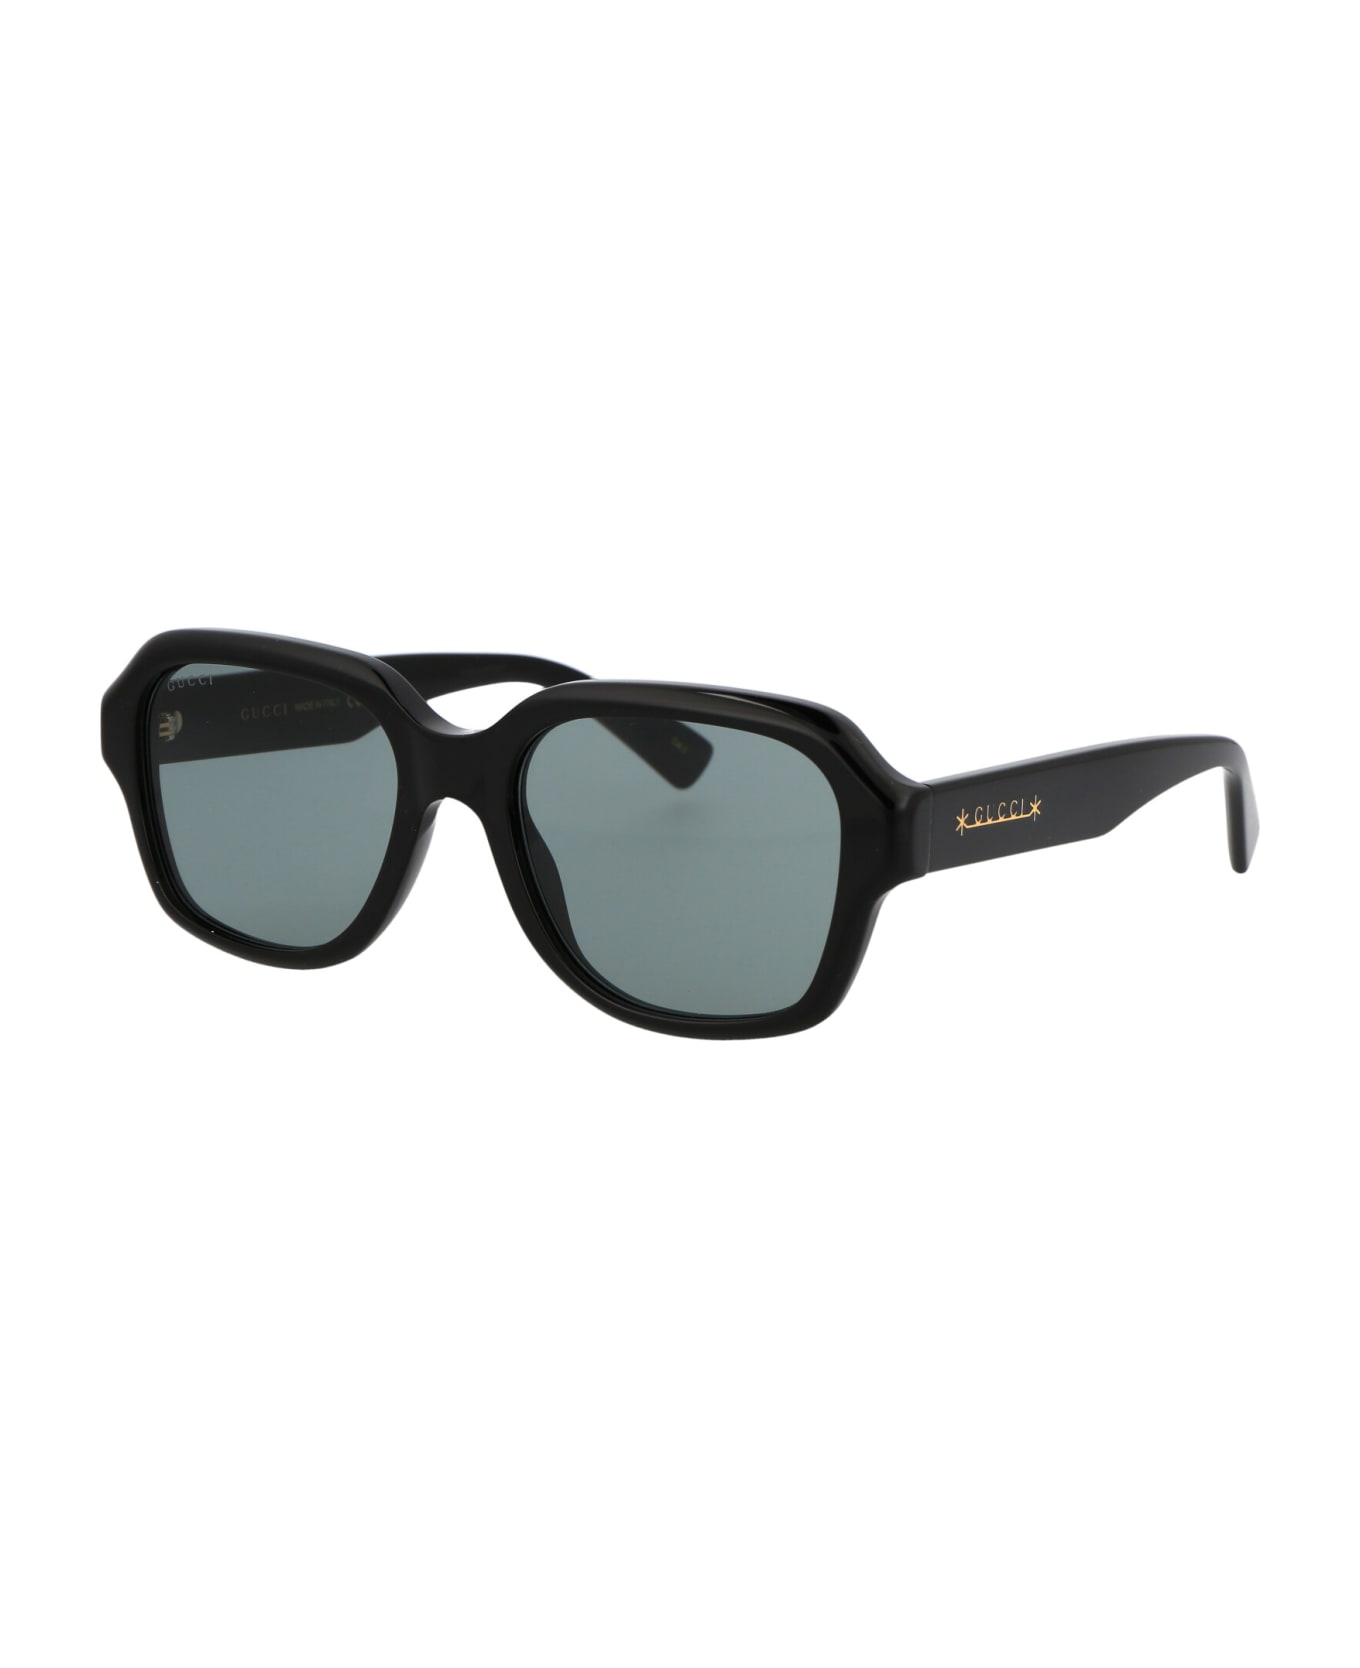 Gucci Eyewear Gg1174s Sunglasses - 001 BLACK BLACK SMOKE